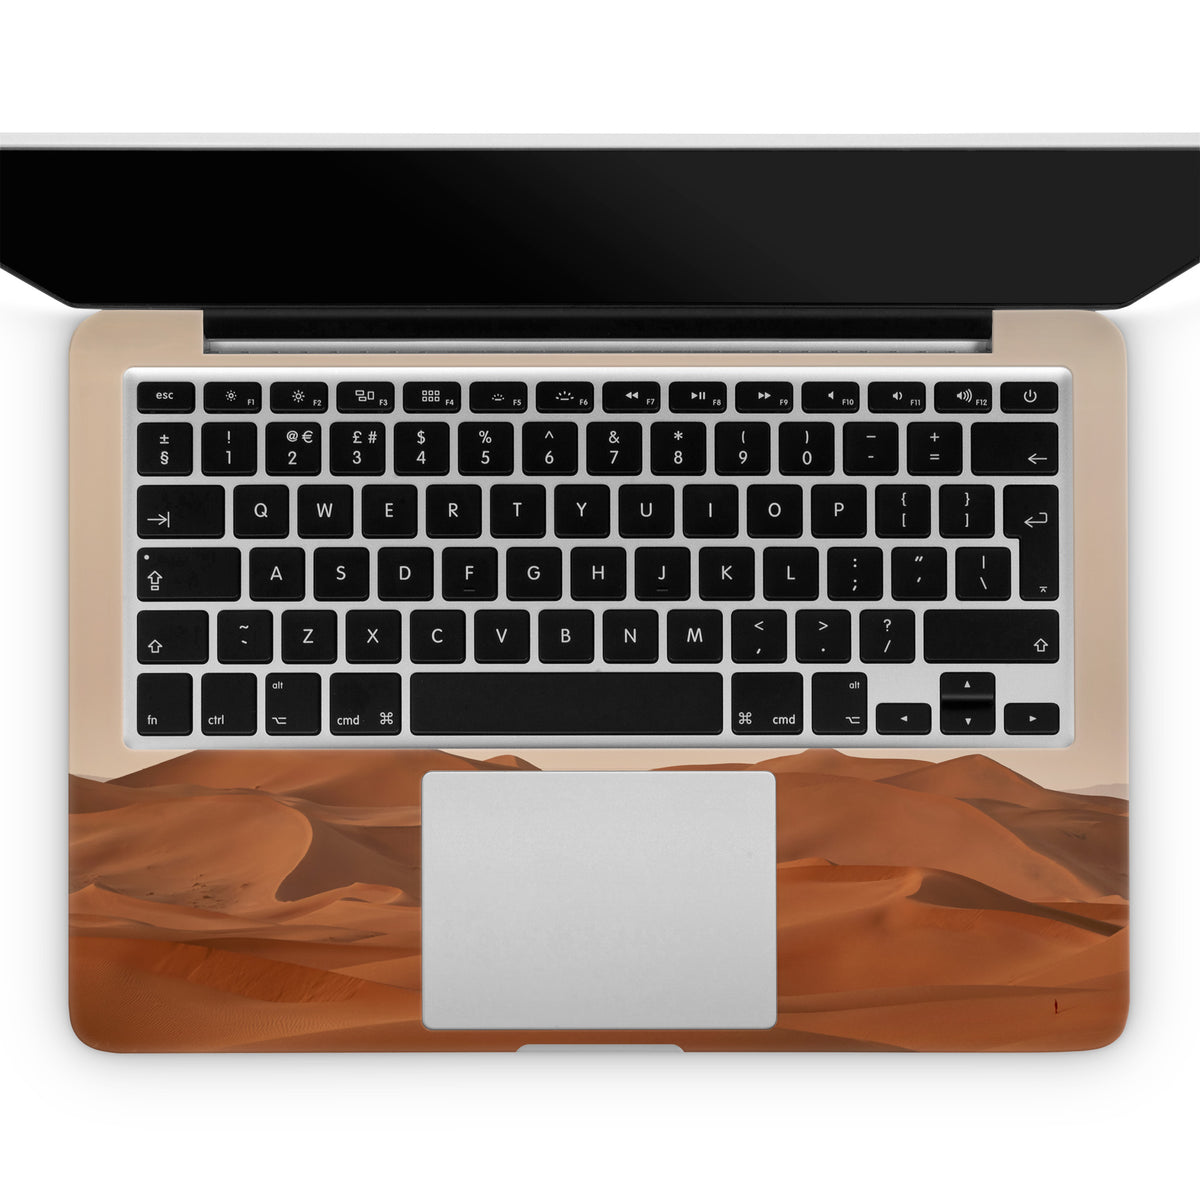 Mojave (MacBook Skin)